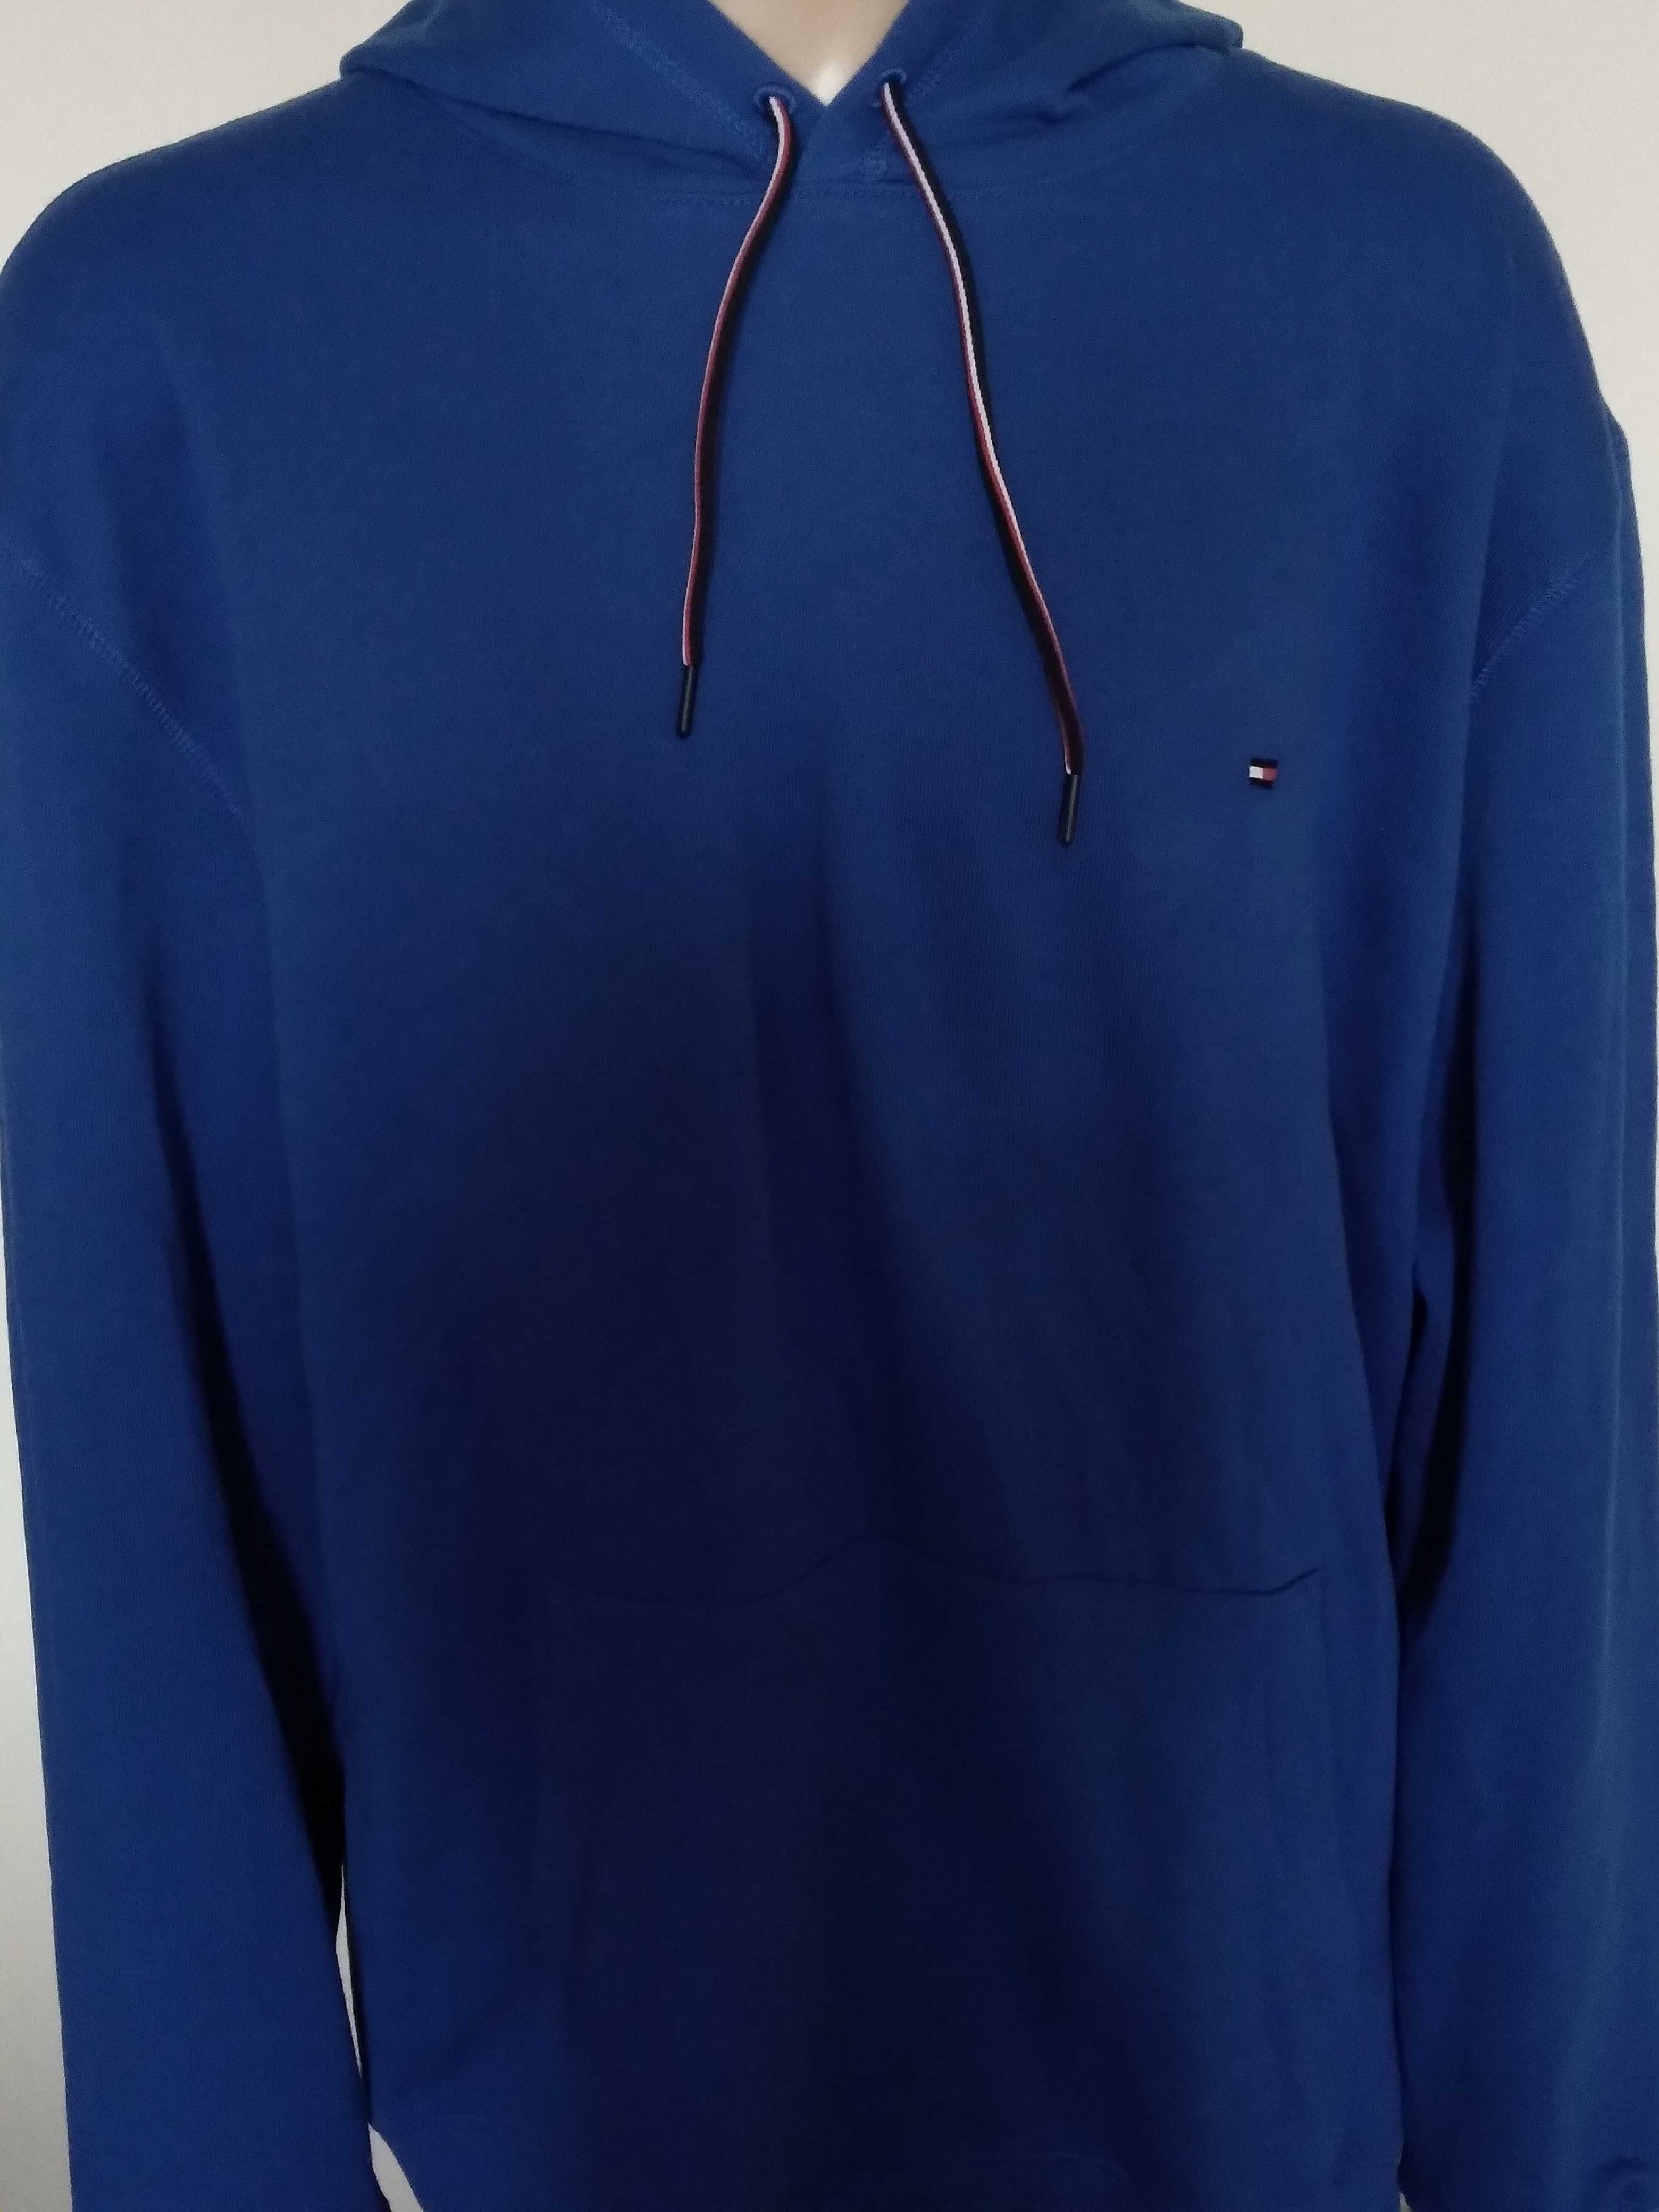 Bluza z kapturem męska Tommy Hilfiger 3XL niebieska